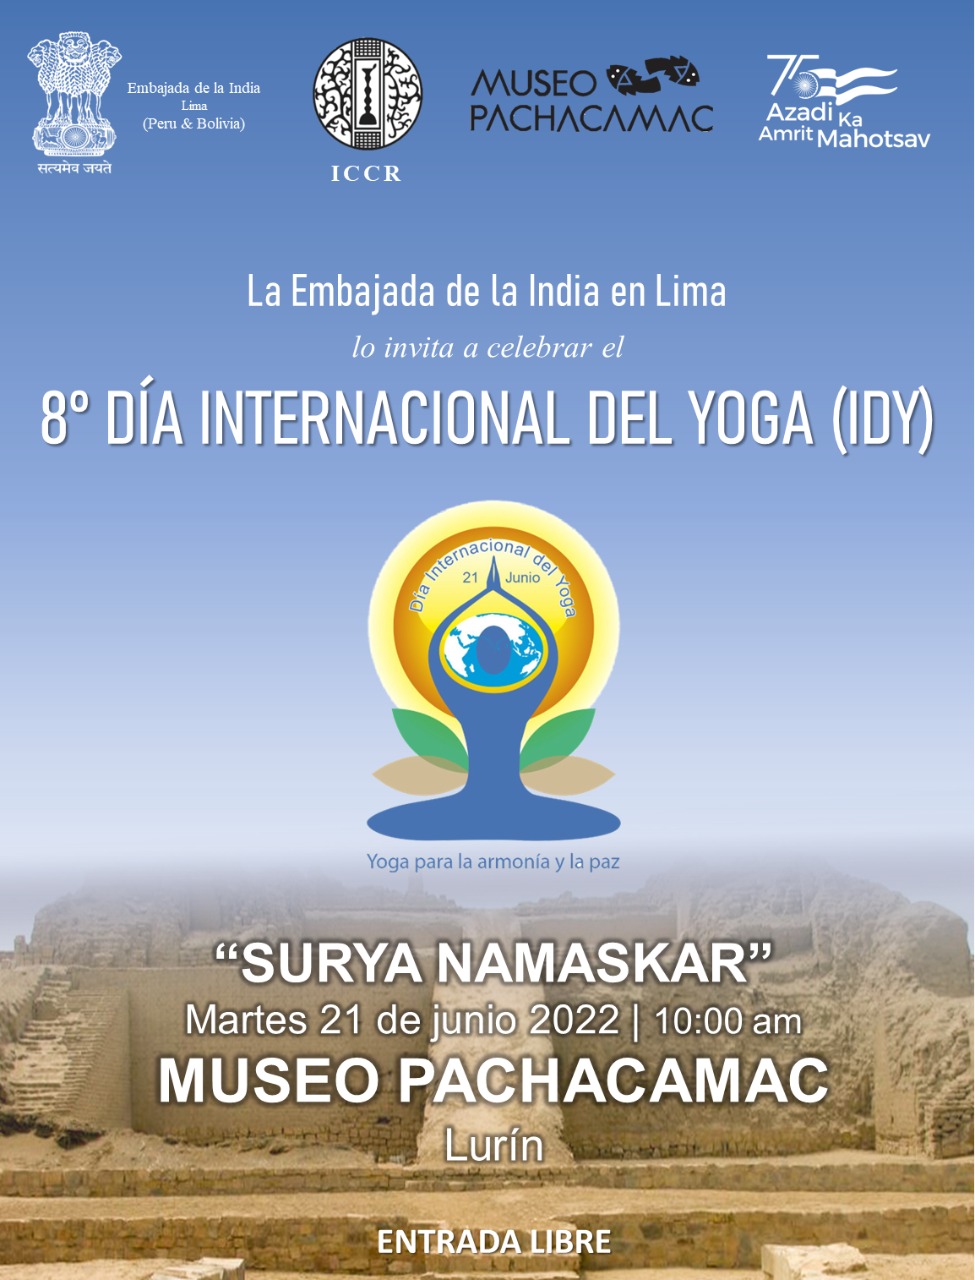 Celebration of 8th International Day of Yoga 2022 - Event held in Pachacamac Musuem, Peru